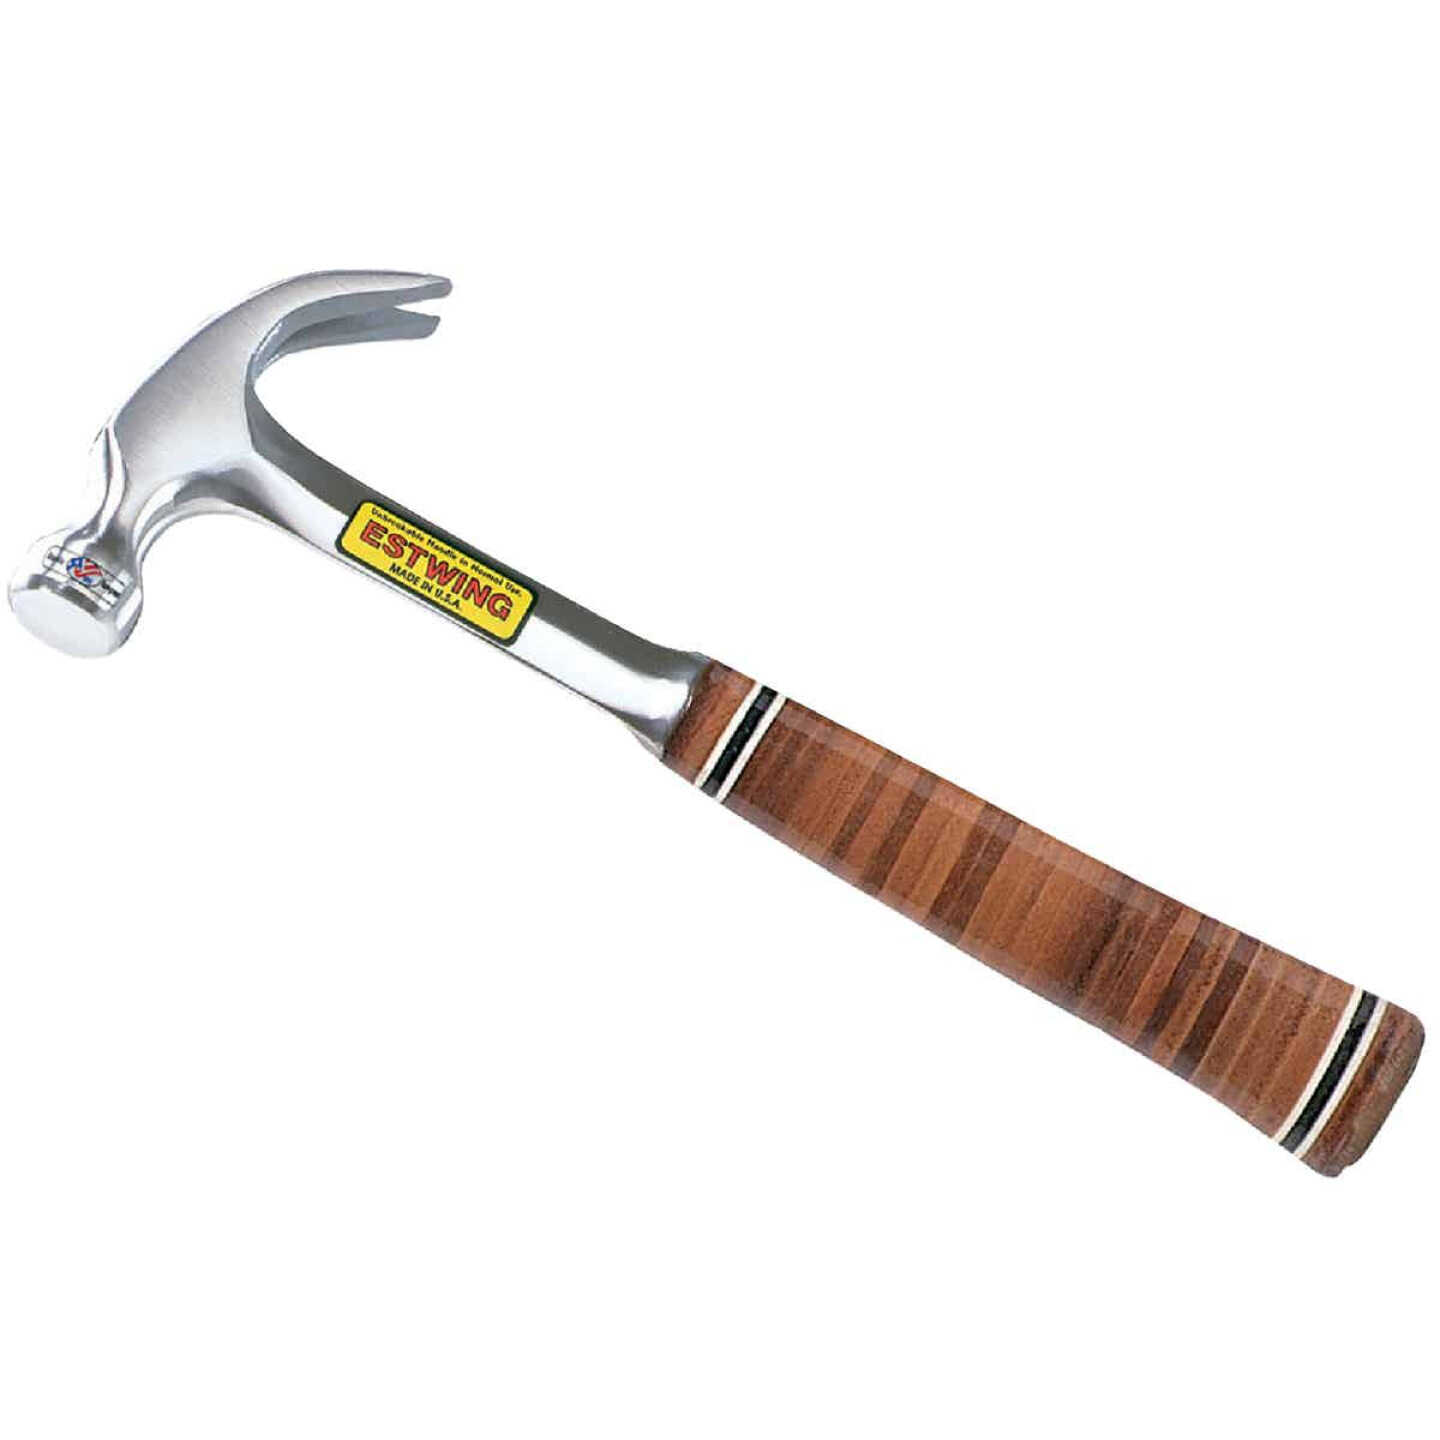 Estwing 16-oz Smooth Face Steel Head Steel Claw Hammer